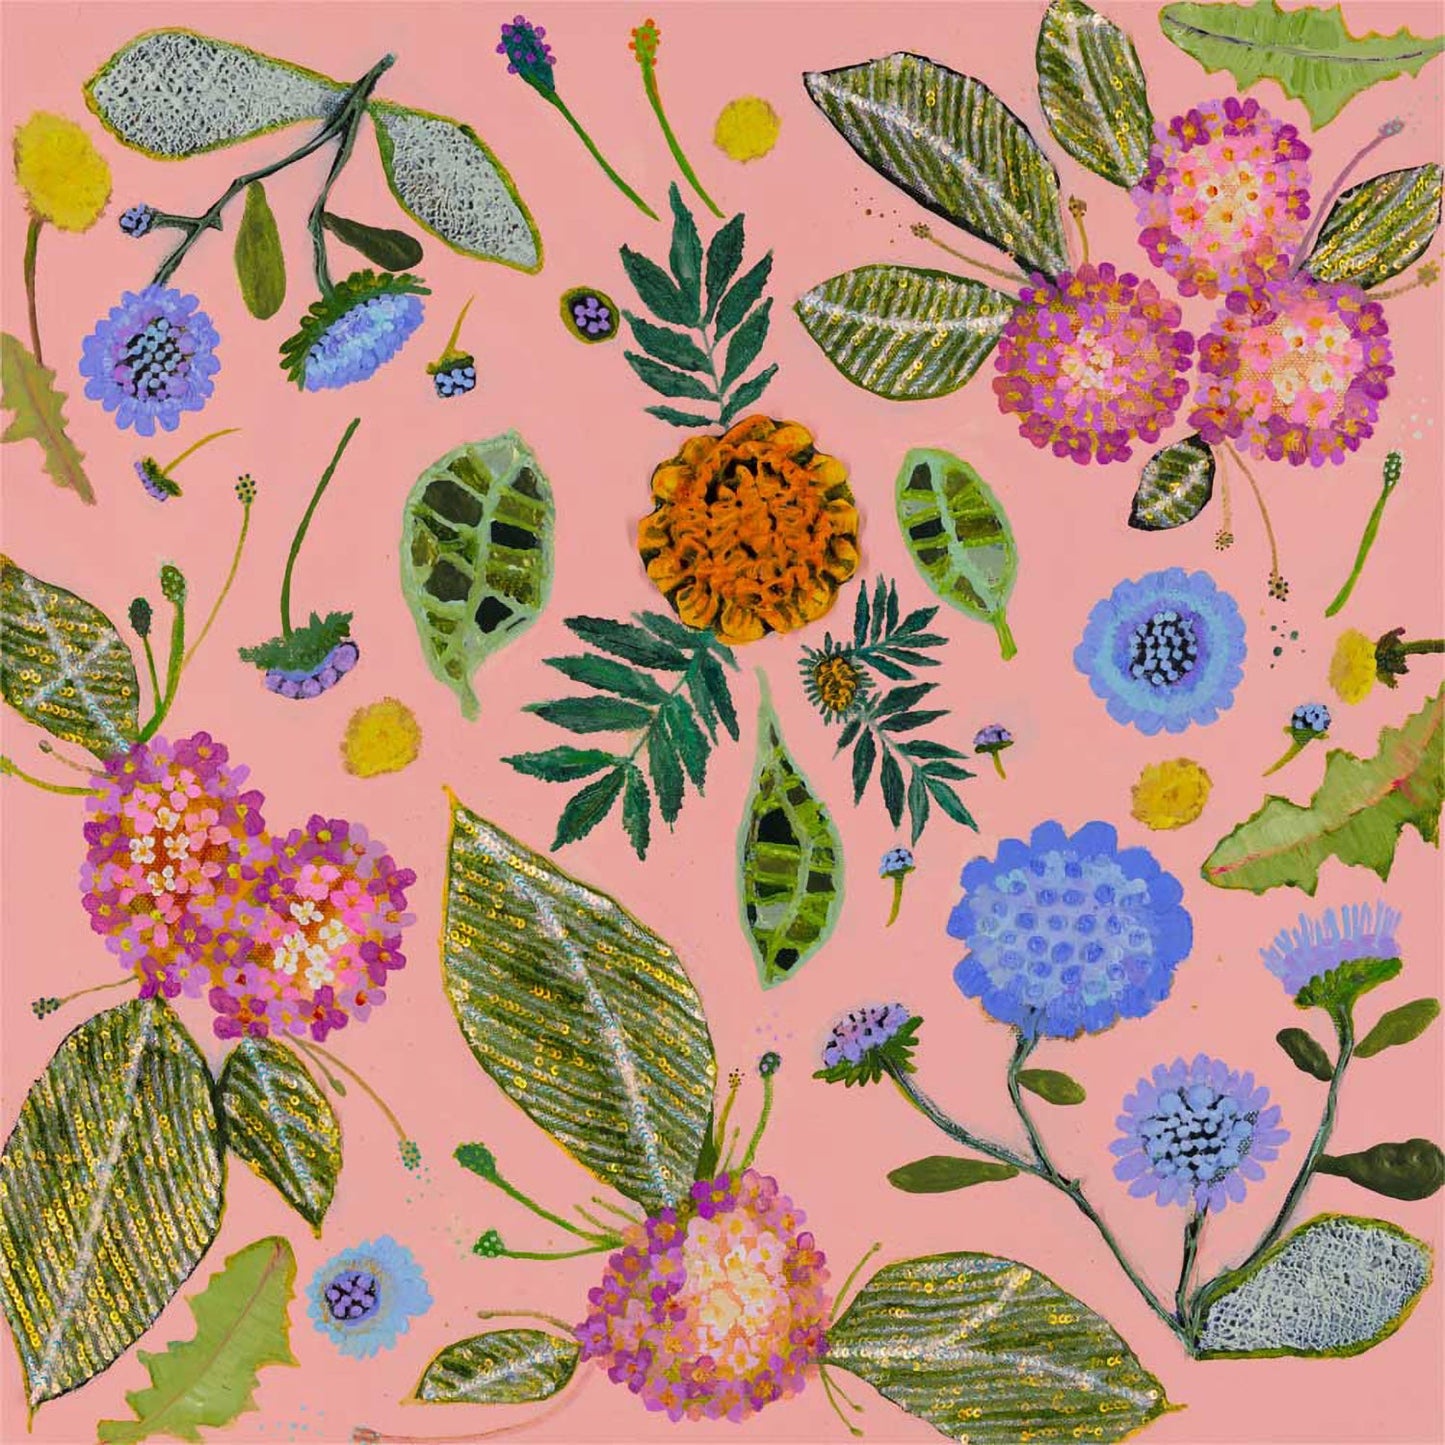 Wildflowers - Pincushions, Dandelions & Lantana Canvas Wall Art